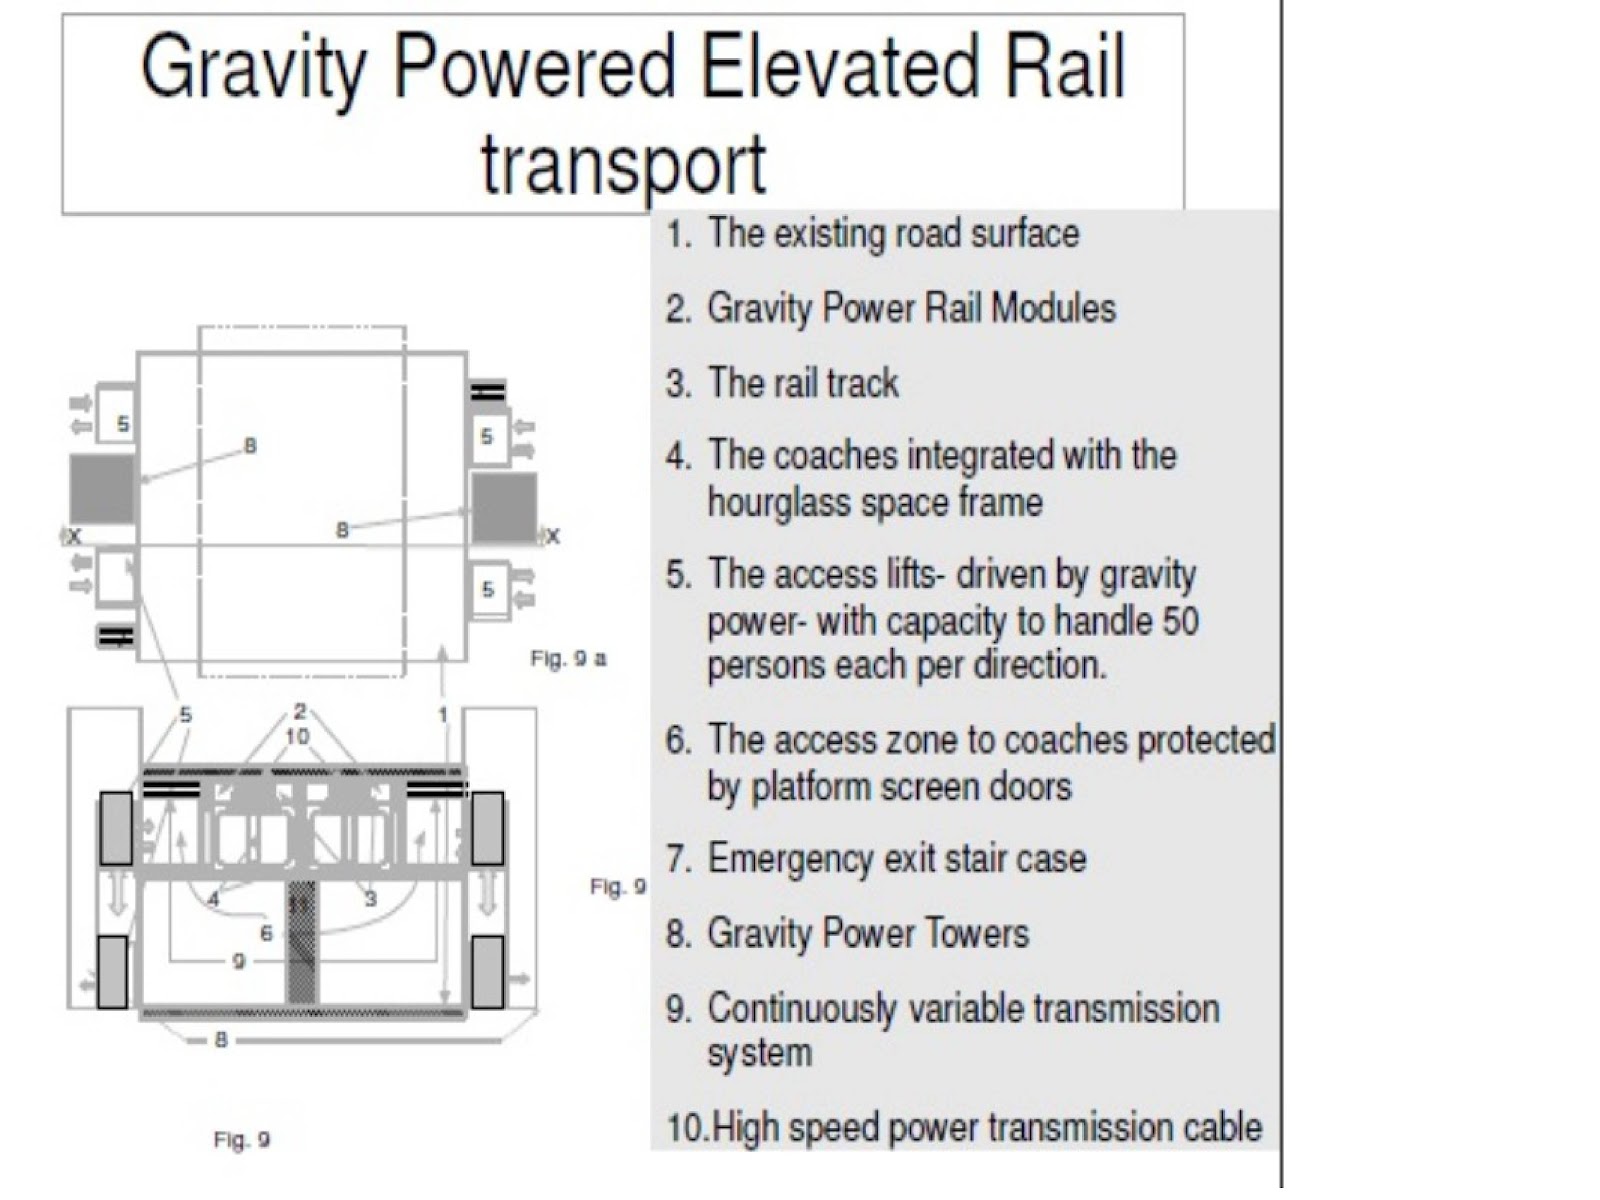 GravityPowerTowersaspresented on24May2011PARIS-21.jpg